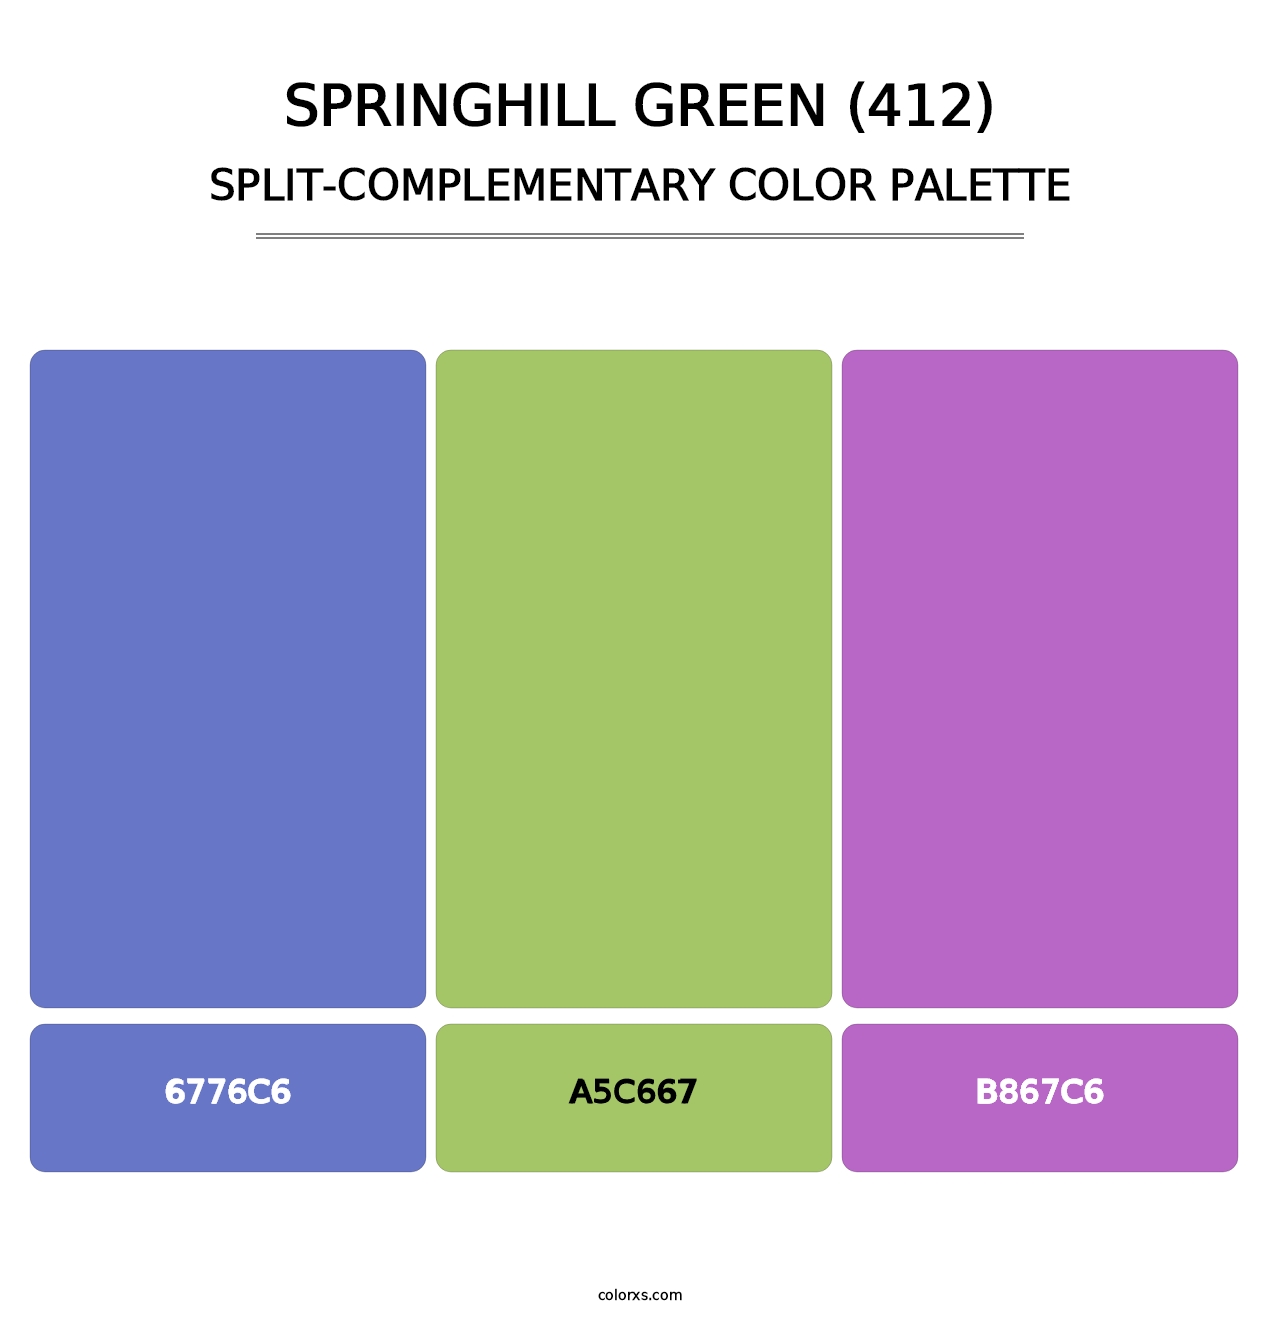 Springhill Green (412) - Split-Complementary Color Palette